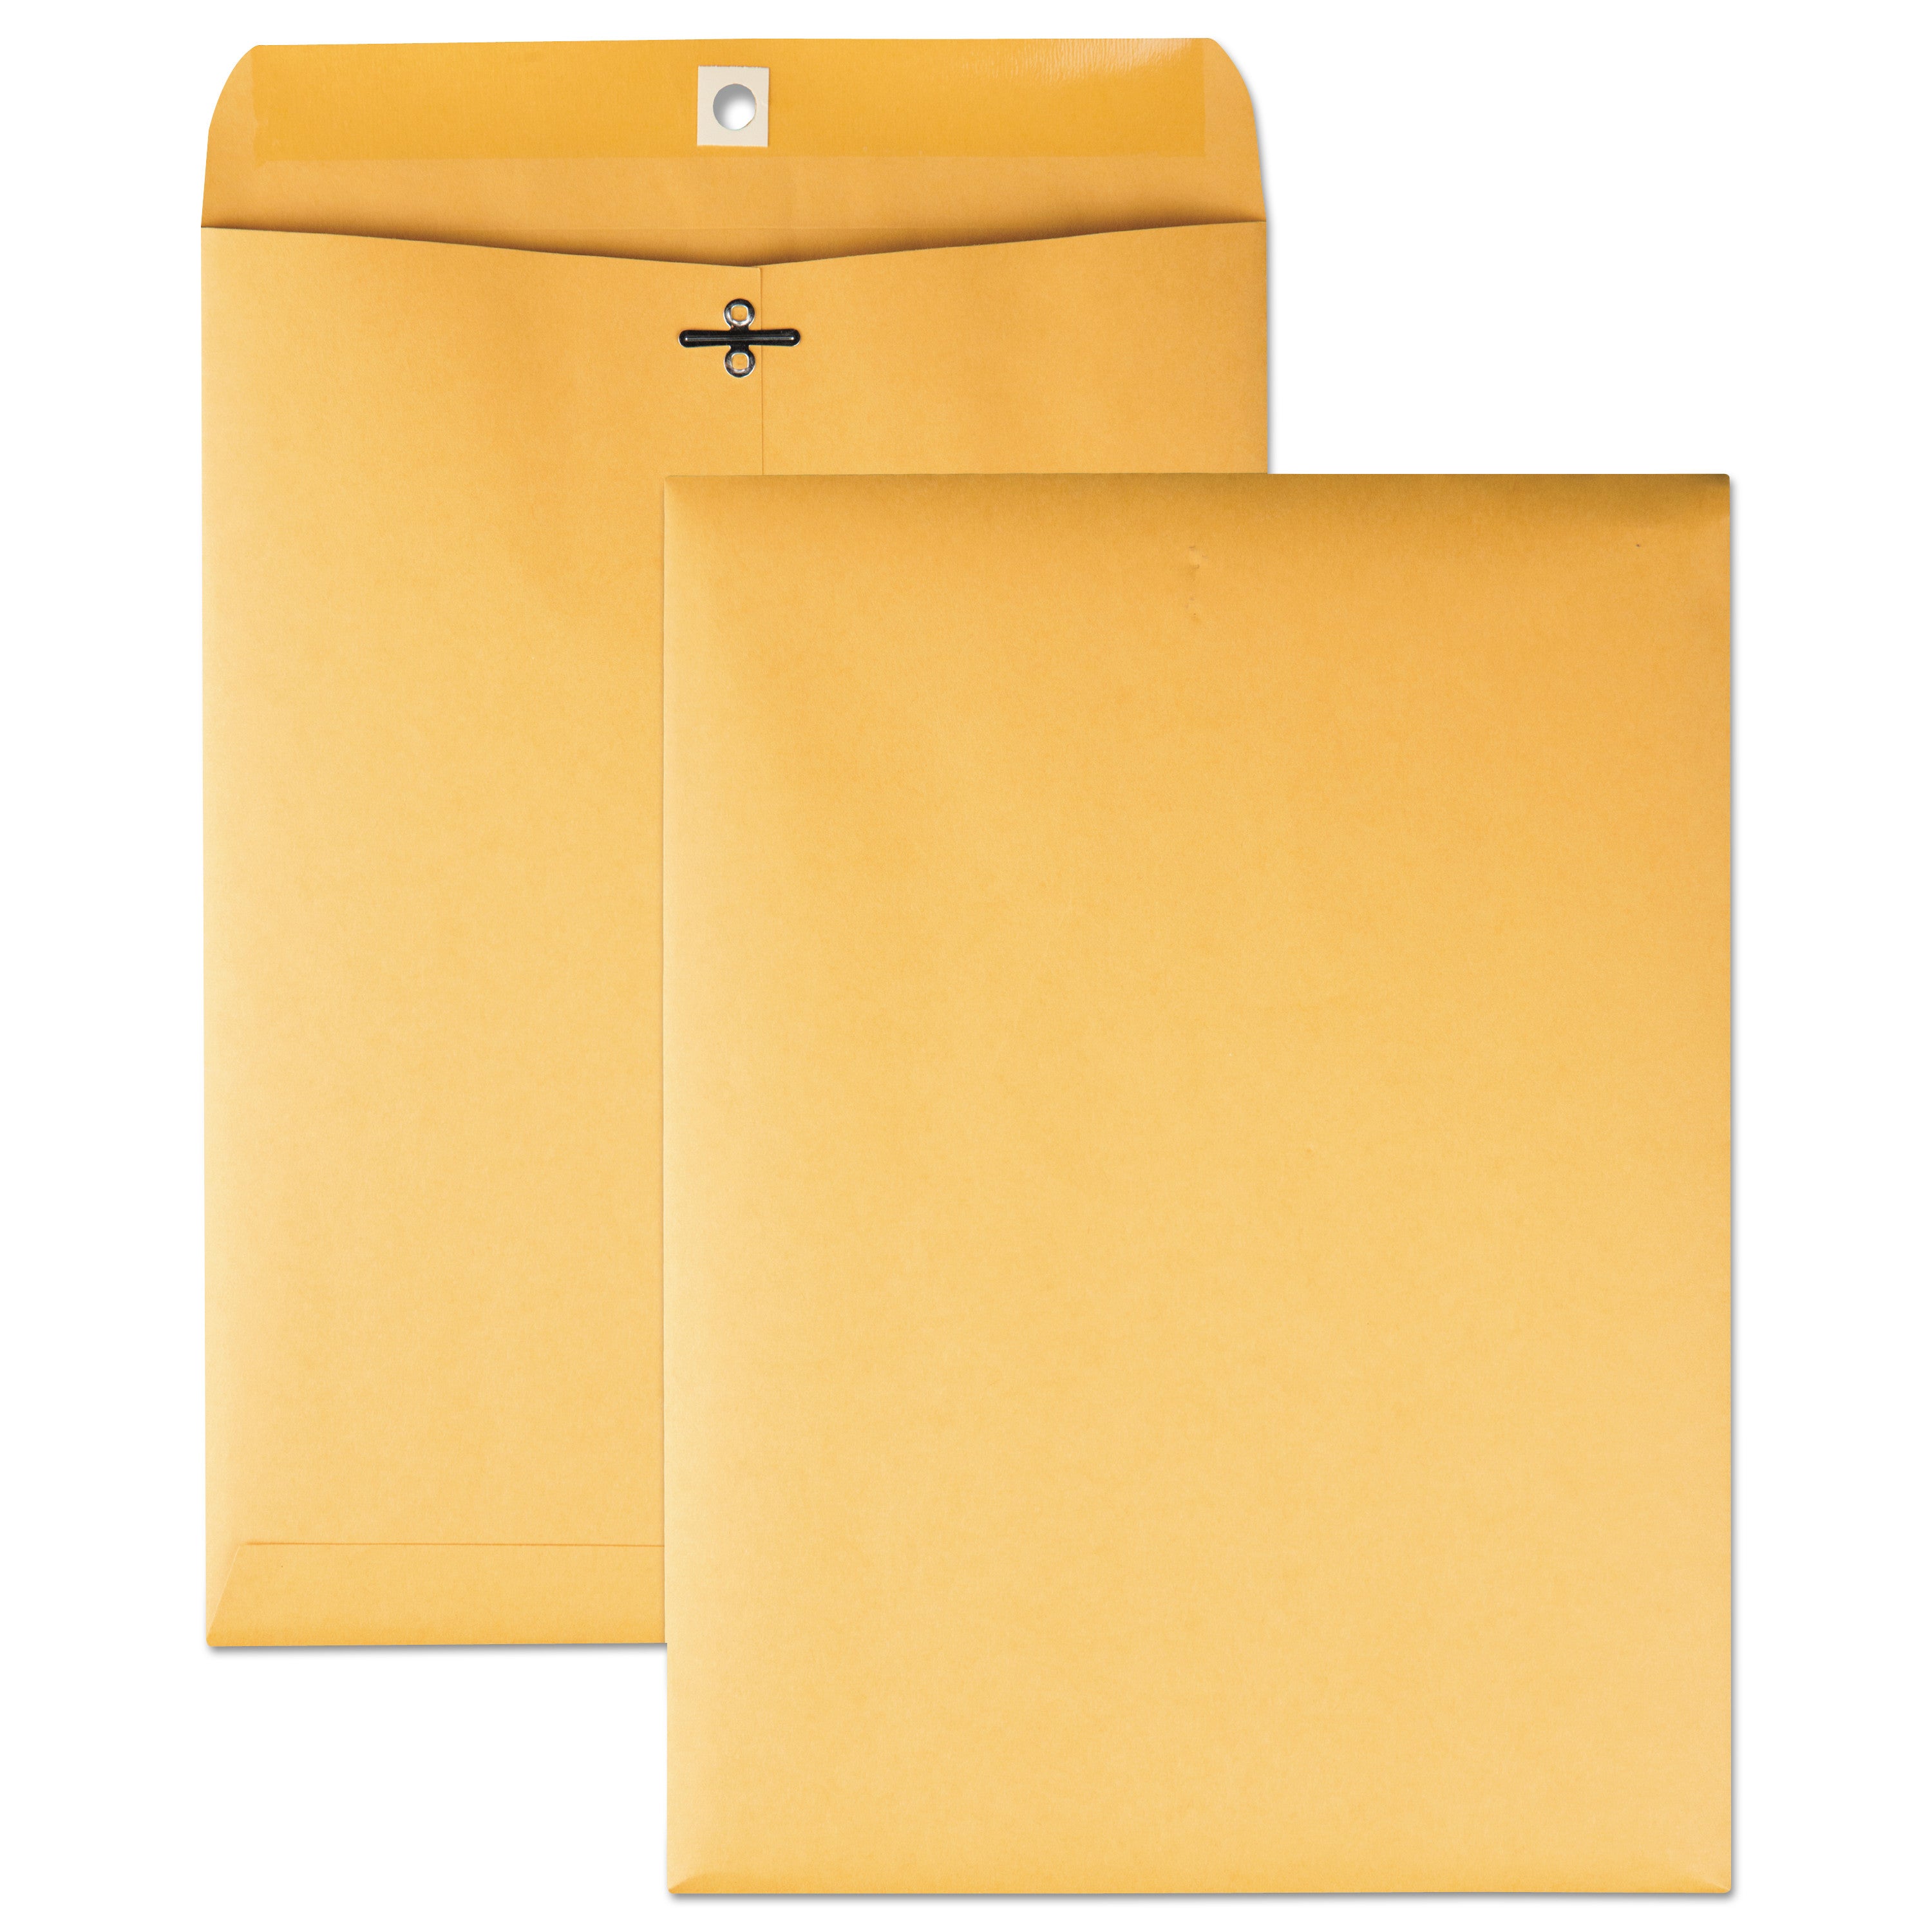 Clasp Envelope, 28 lb Bond Weight Kraft, #90, Cheese Blade Flap, Clasp/Gummed Closure, 9 x 12, Brown Kraft, 100/Box - 